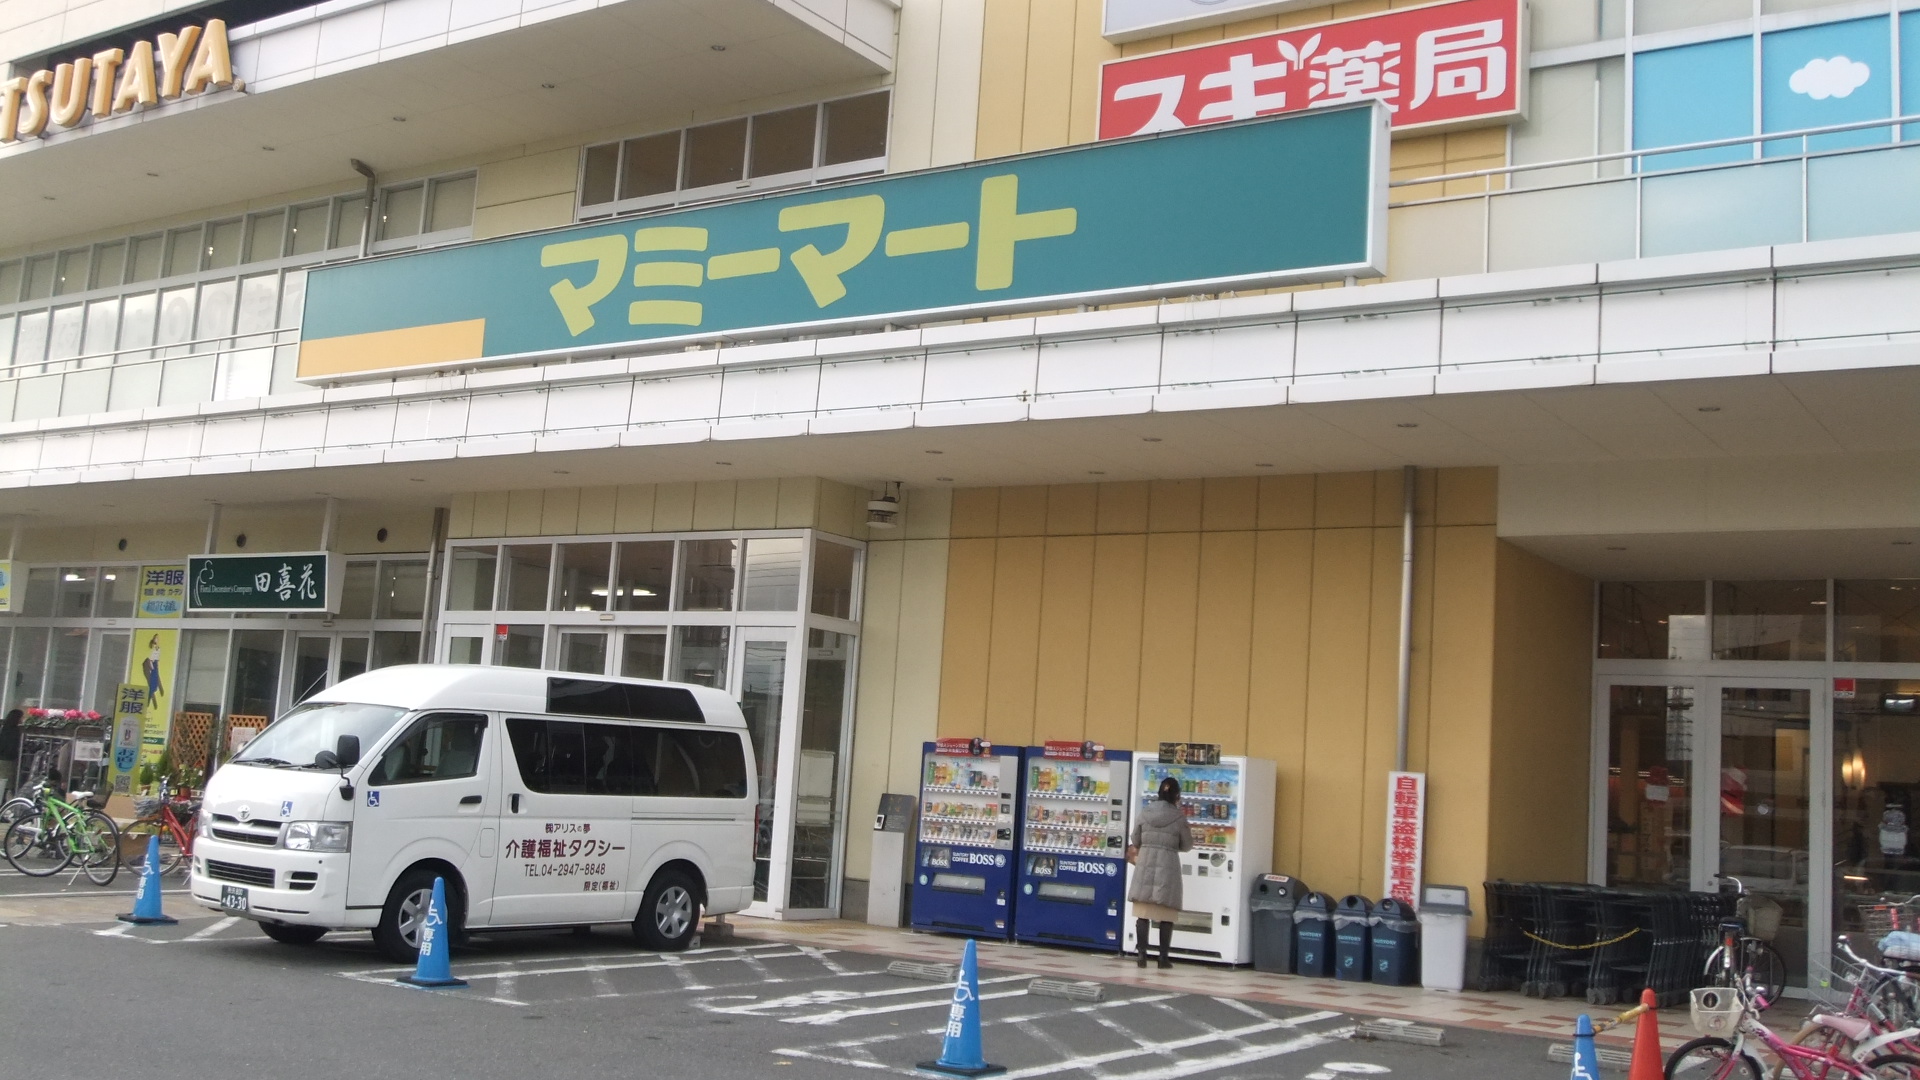 Rental video. TSUTAYA Tokorozawa Yamaguchi shop 1169m up (video rental)